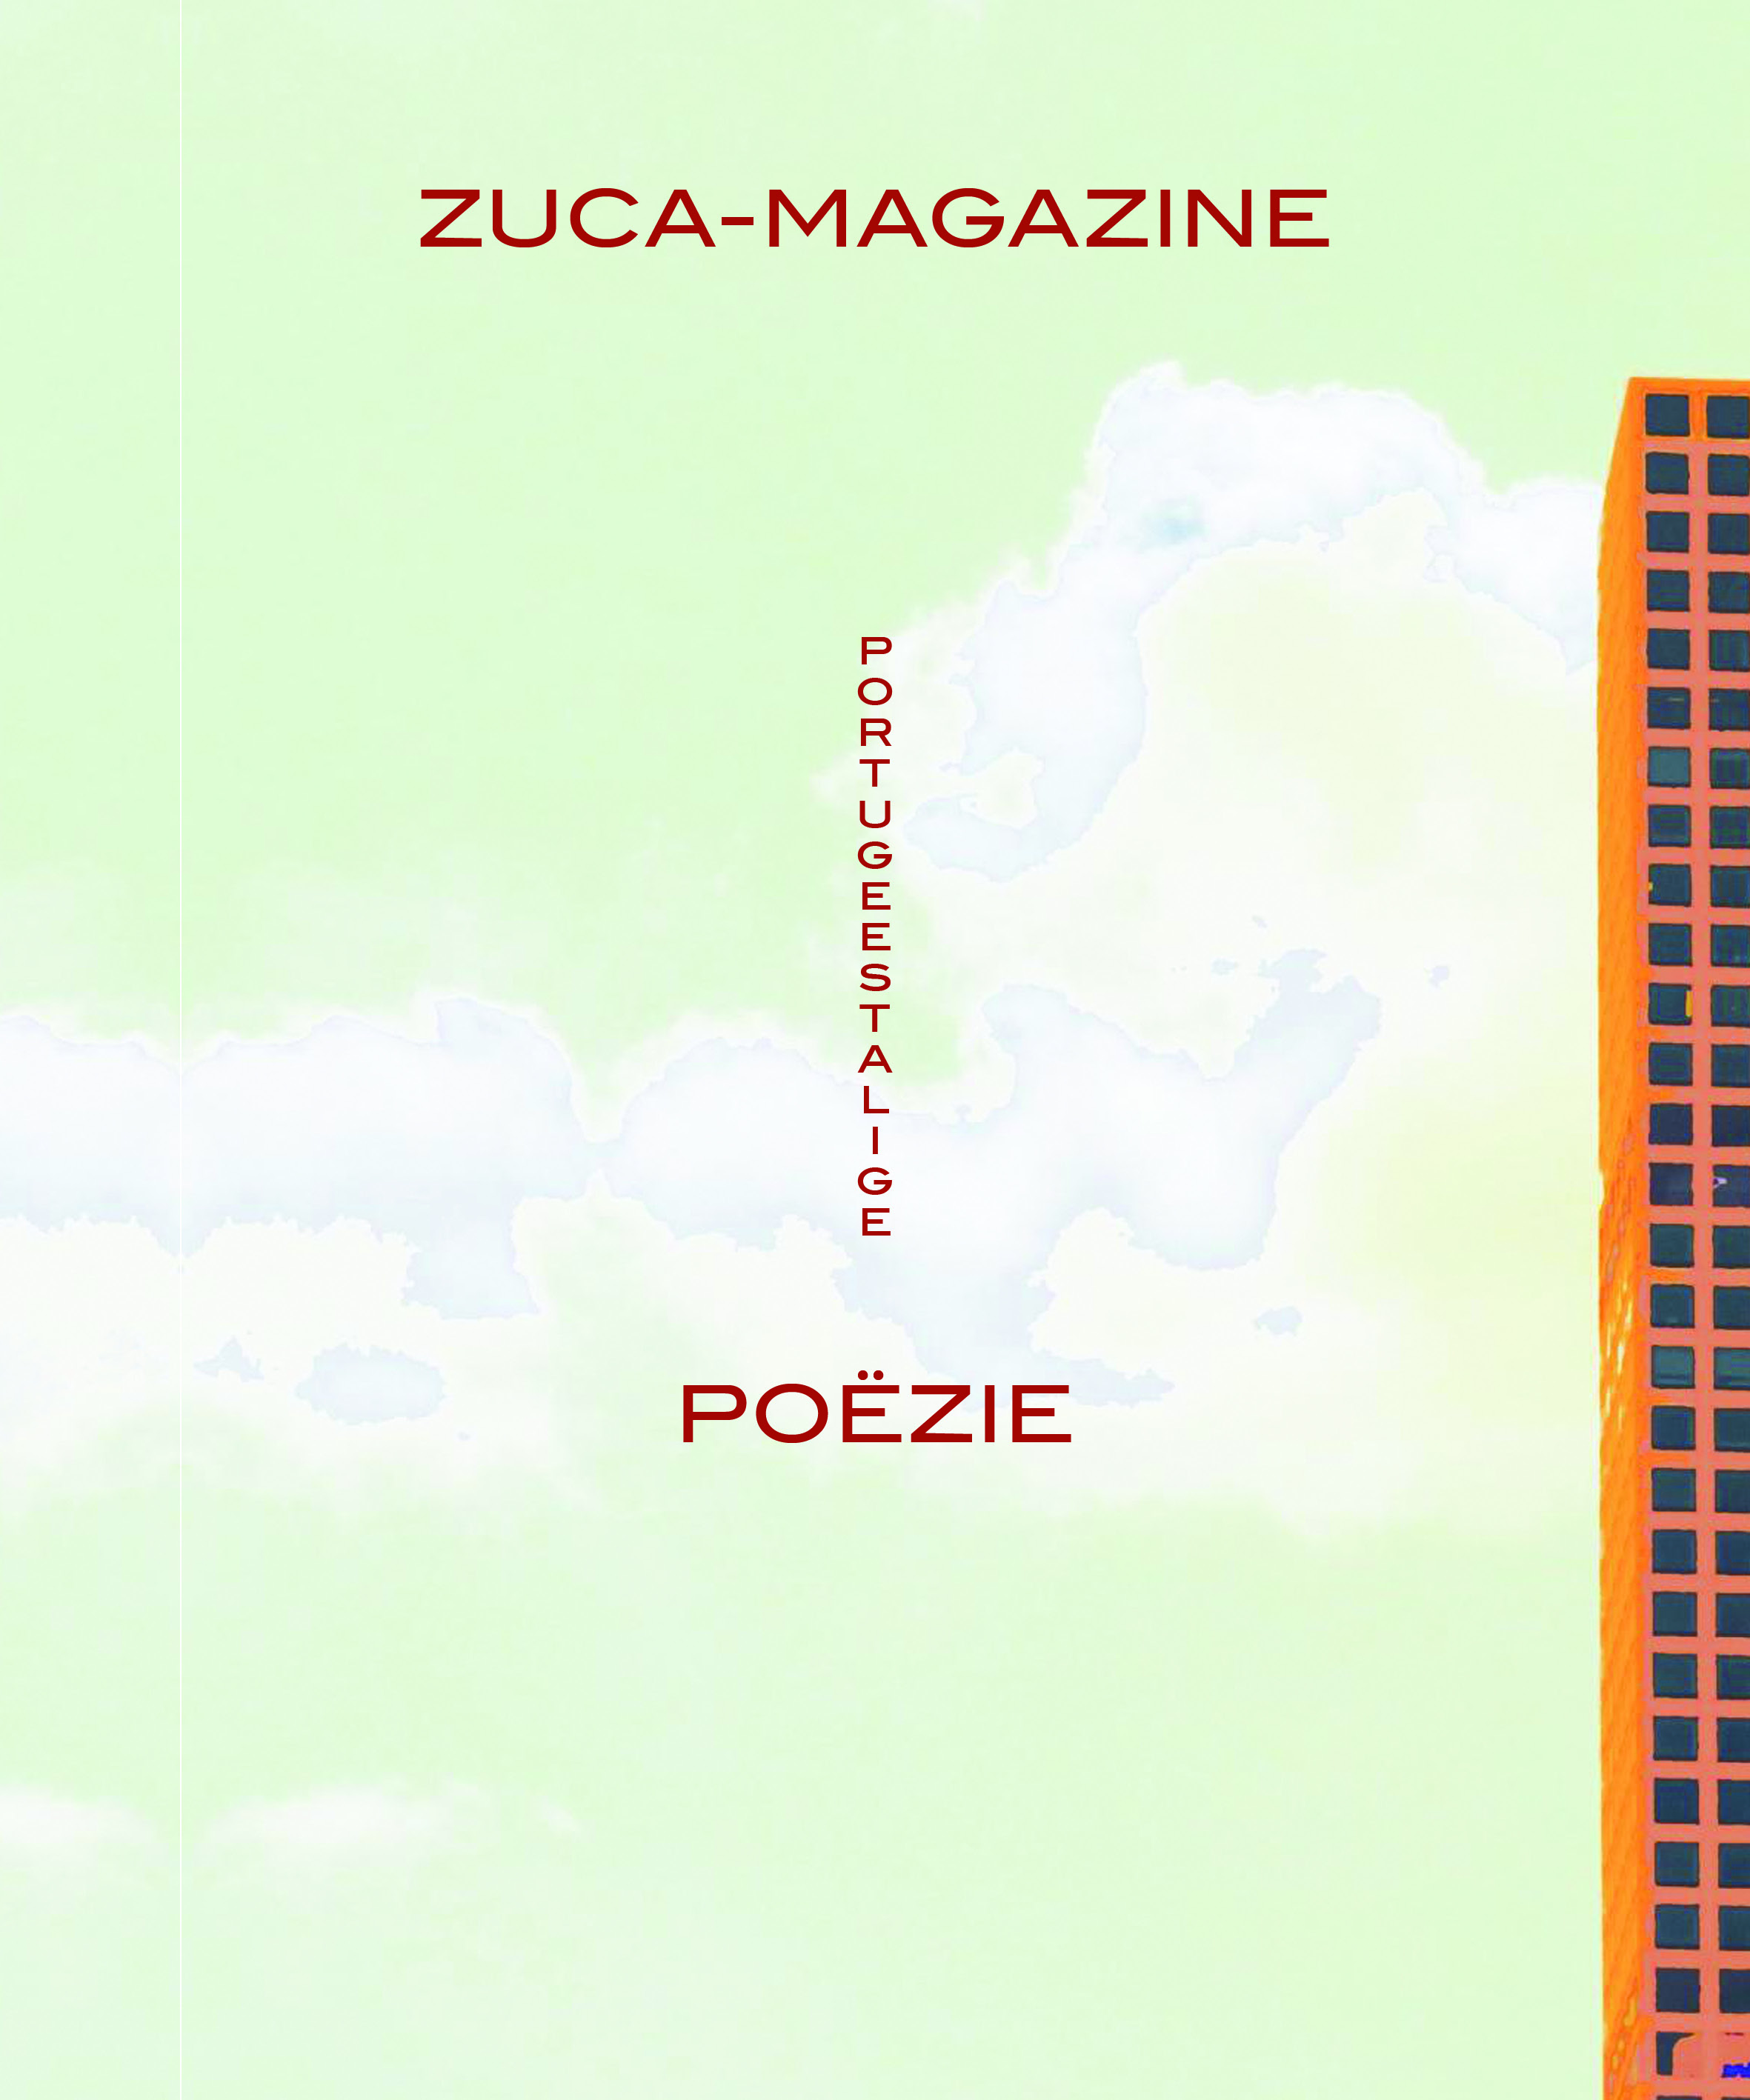 Zuca-magazine